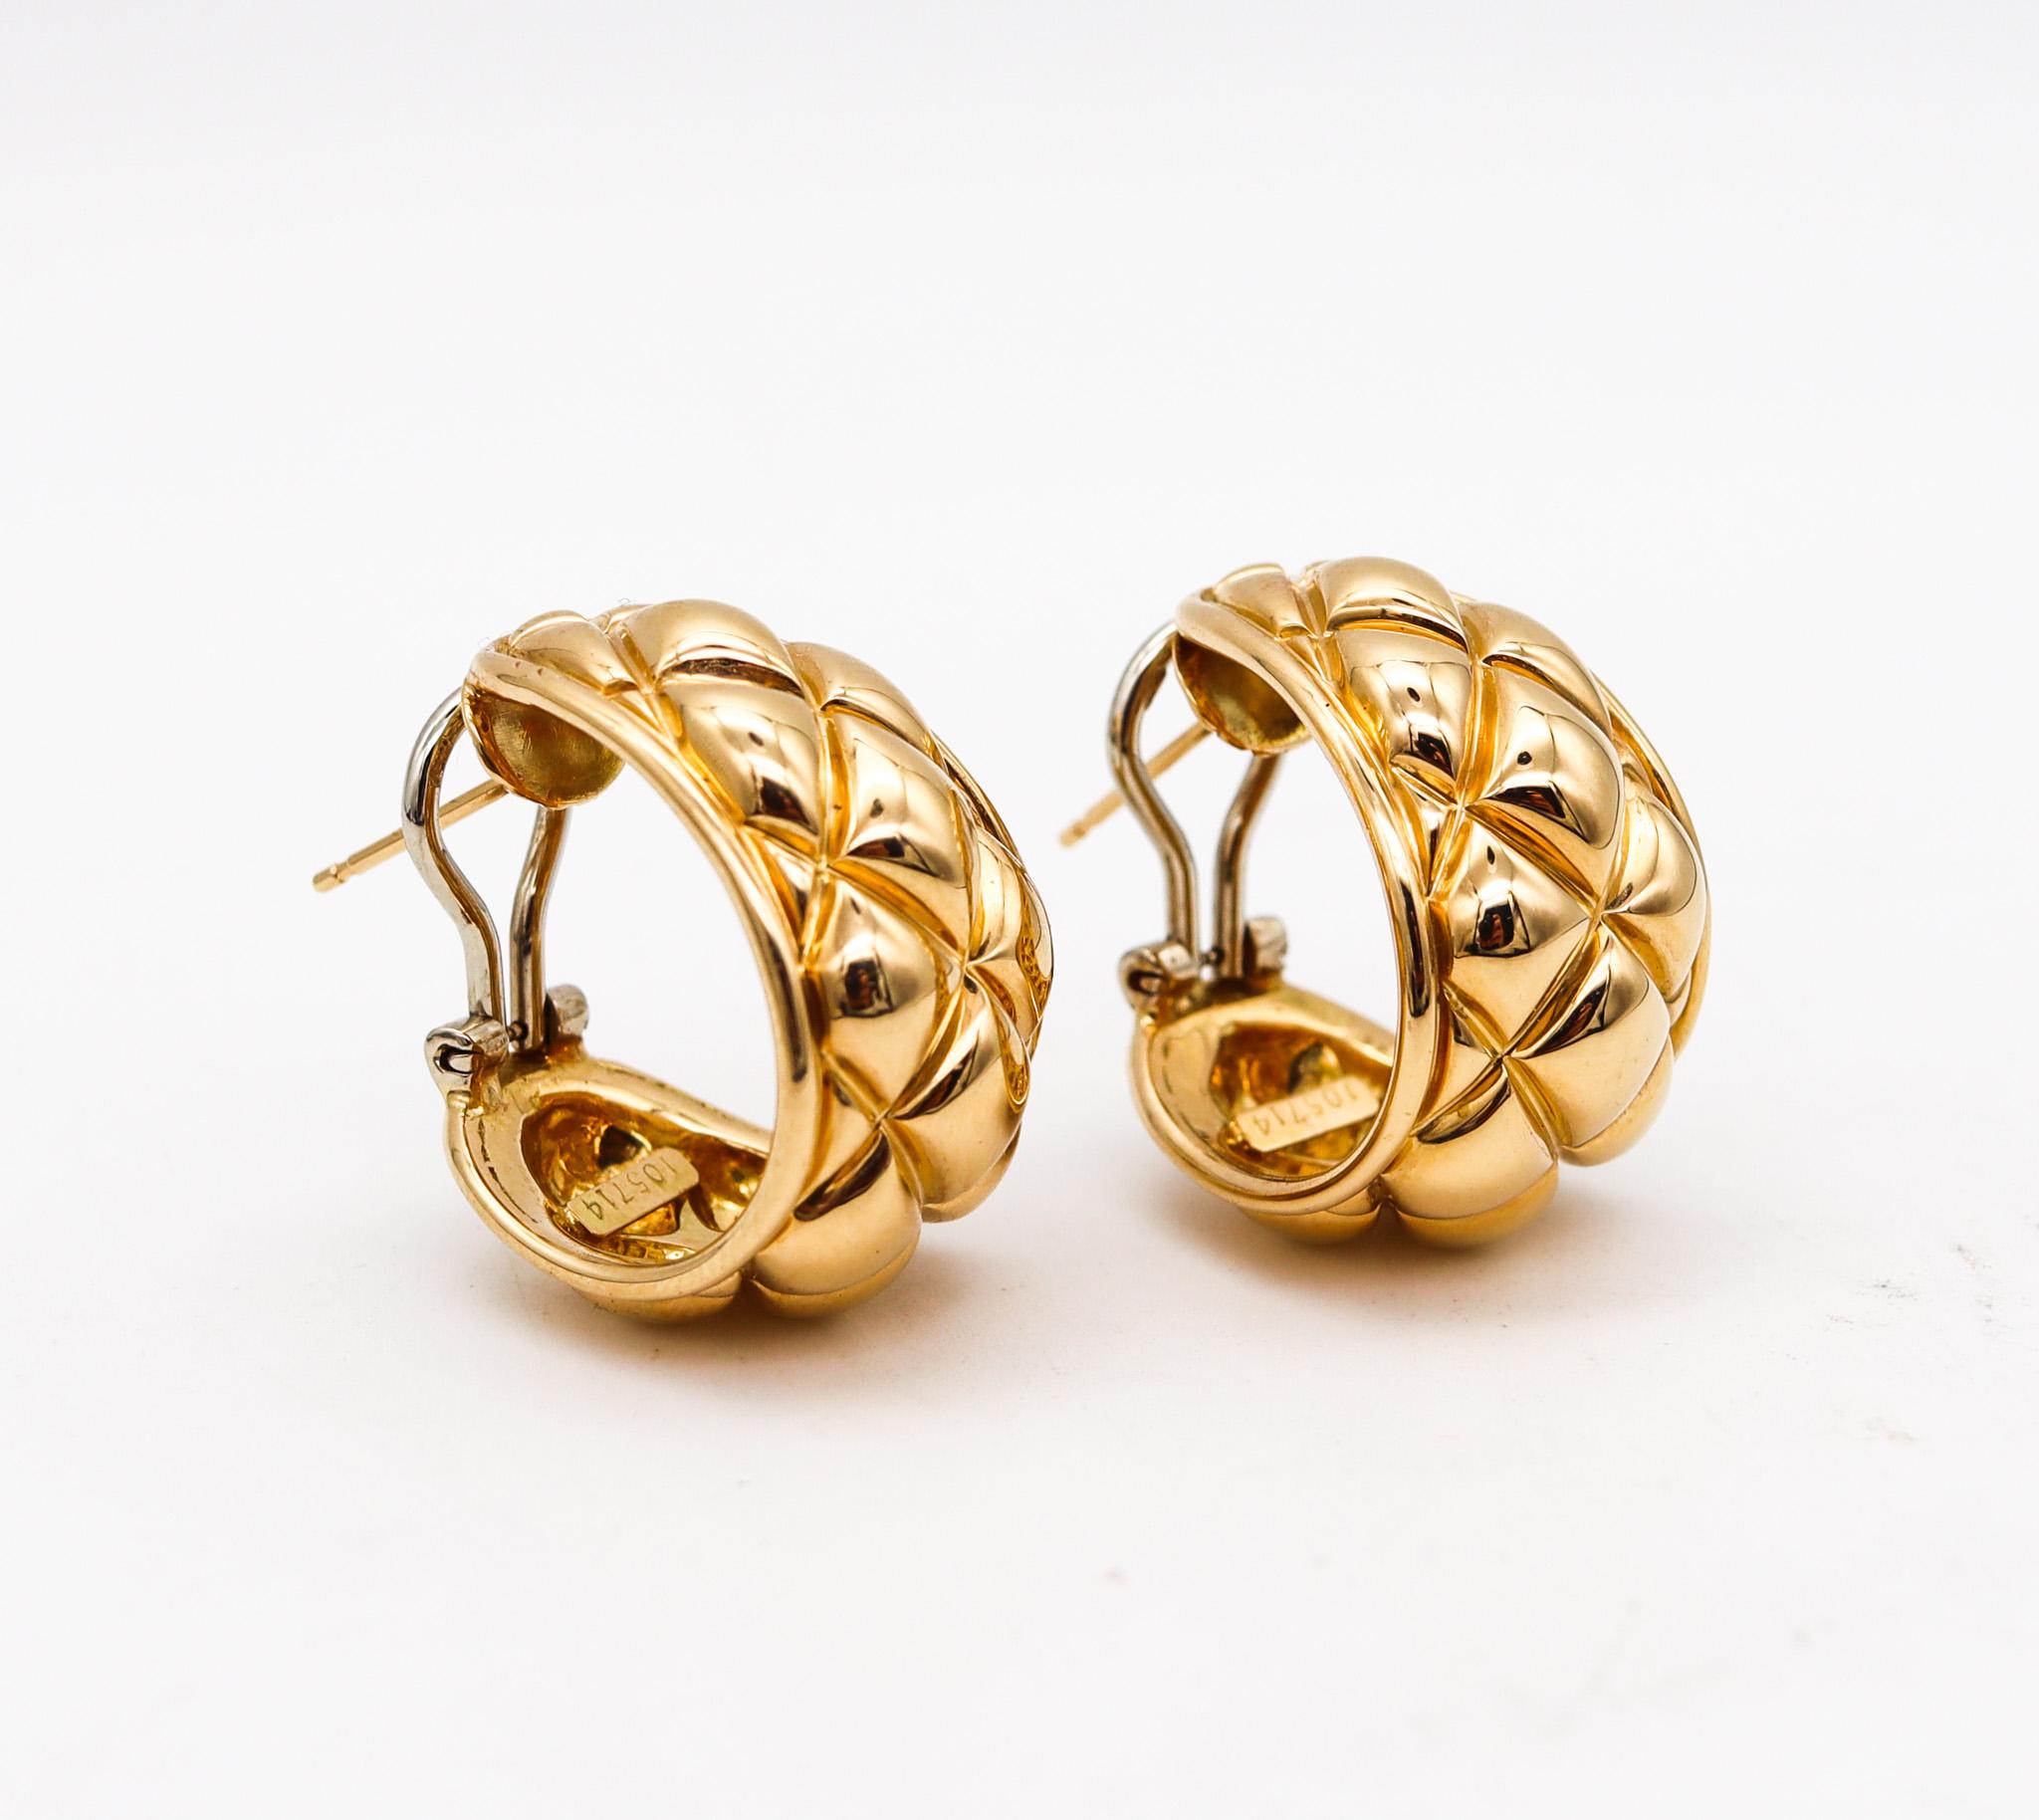 18kt solid gold earrings